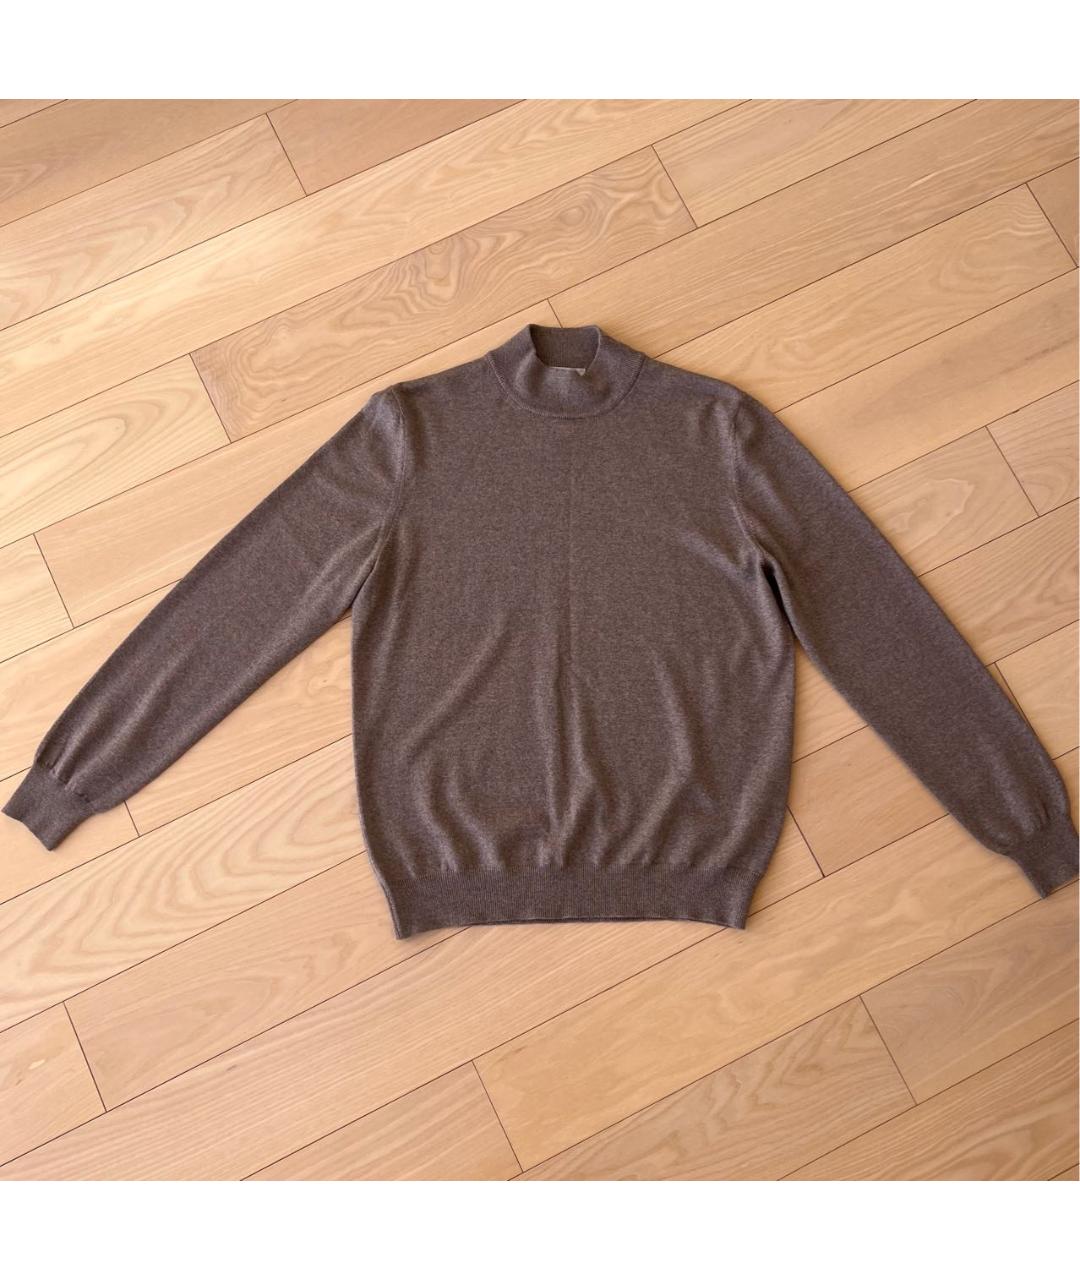 GRAN SASSO Коричневый шерстяной джемпер / свитер, фото 6